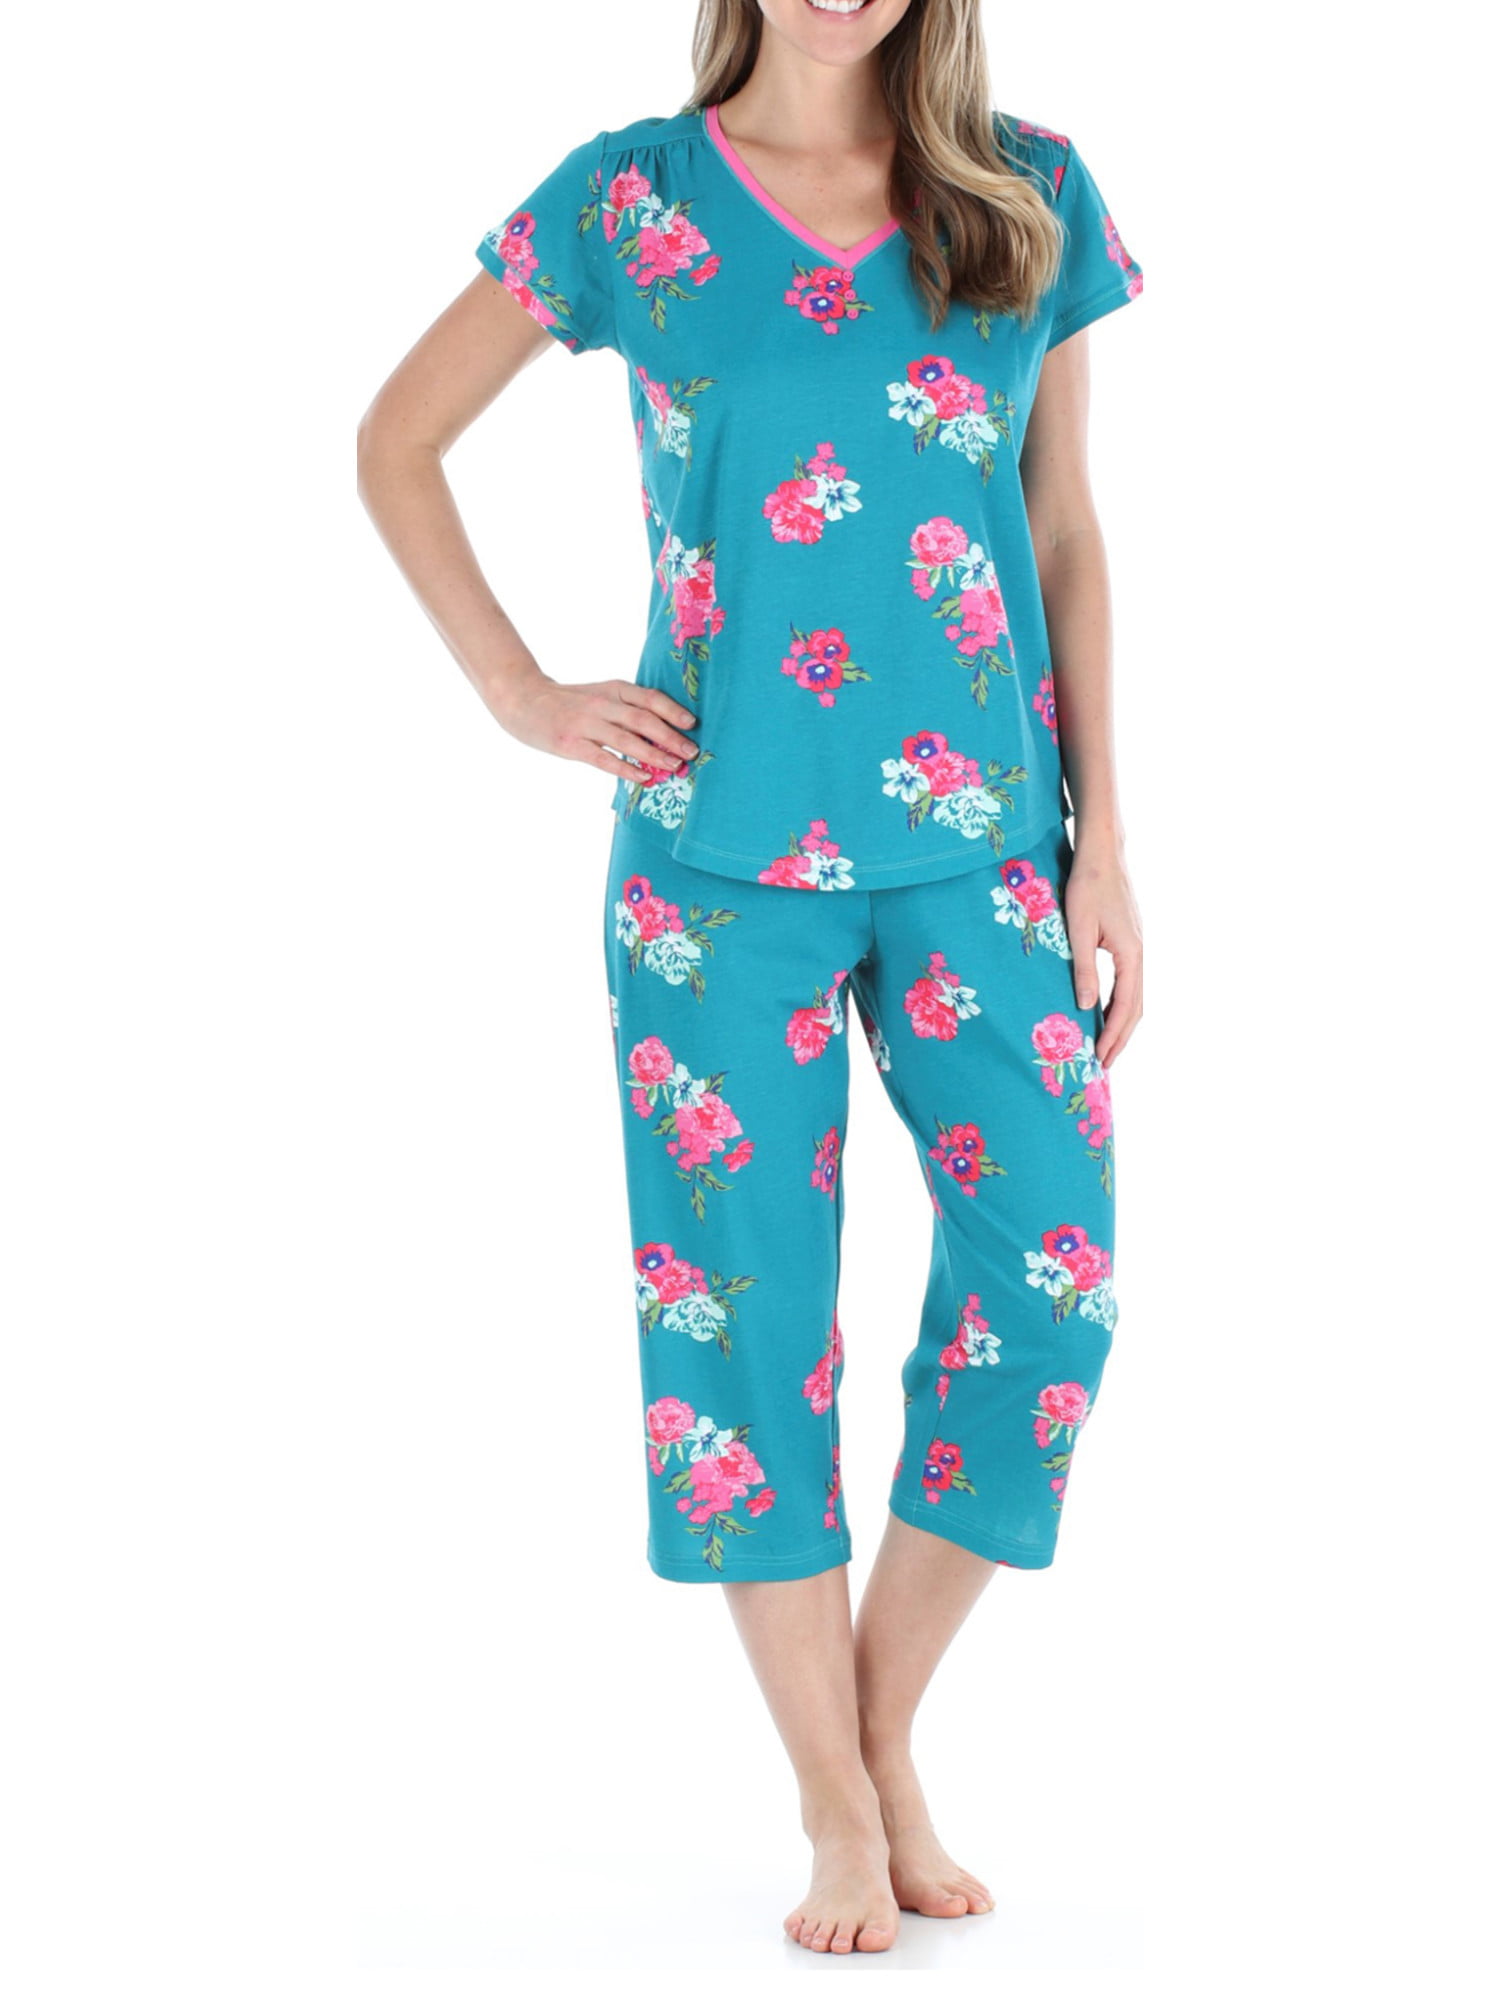 Capris M 8-10 Womens Pajamas Set TEAL w/ PURPLE WHITE FLOWERS Button Up S/S Top